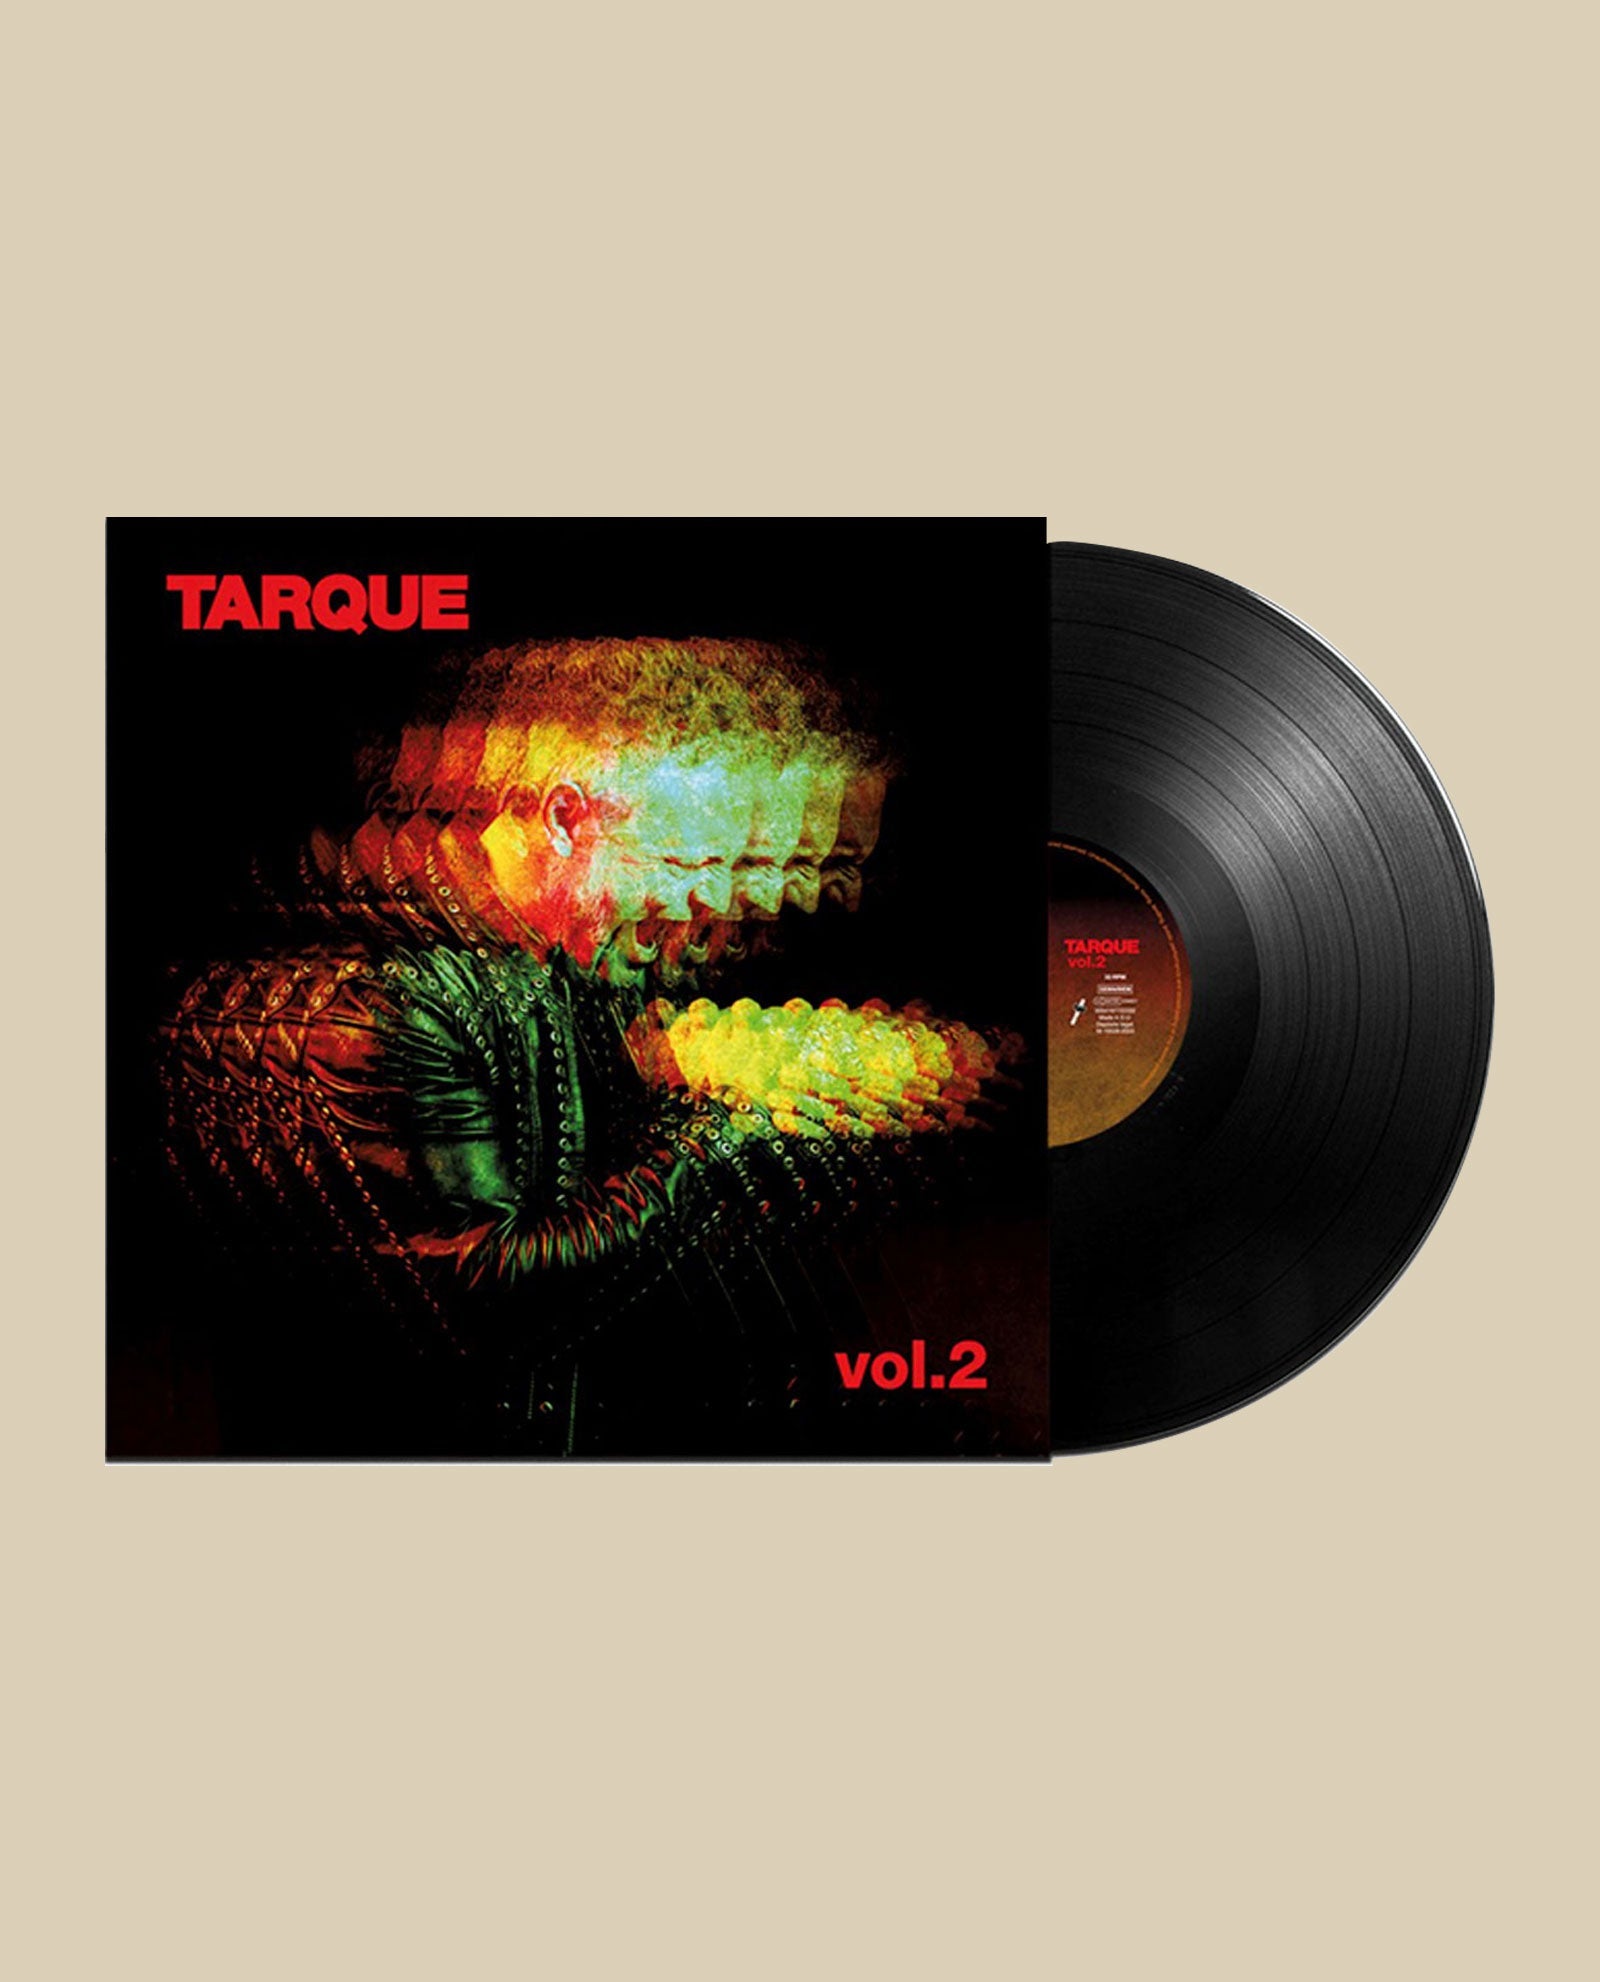 Tarque - LP Vinilo Vol. 2